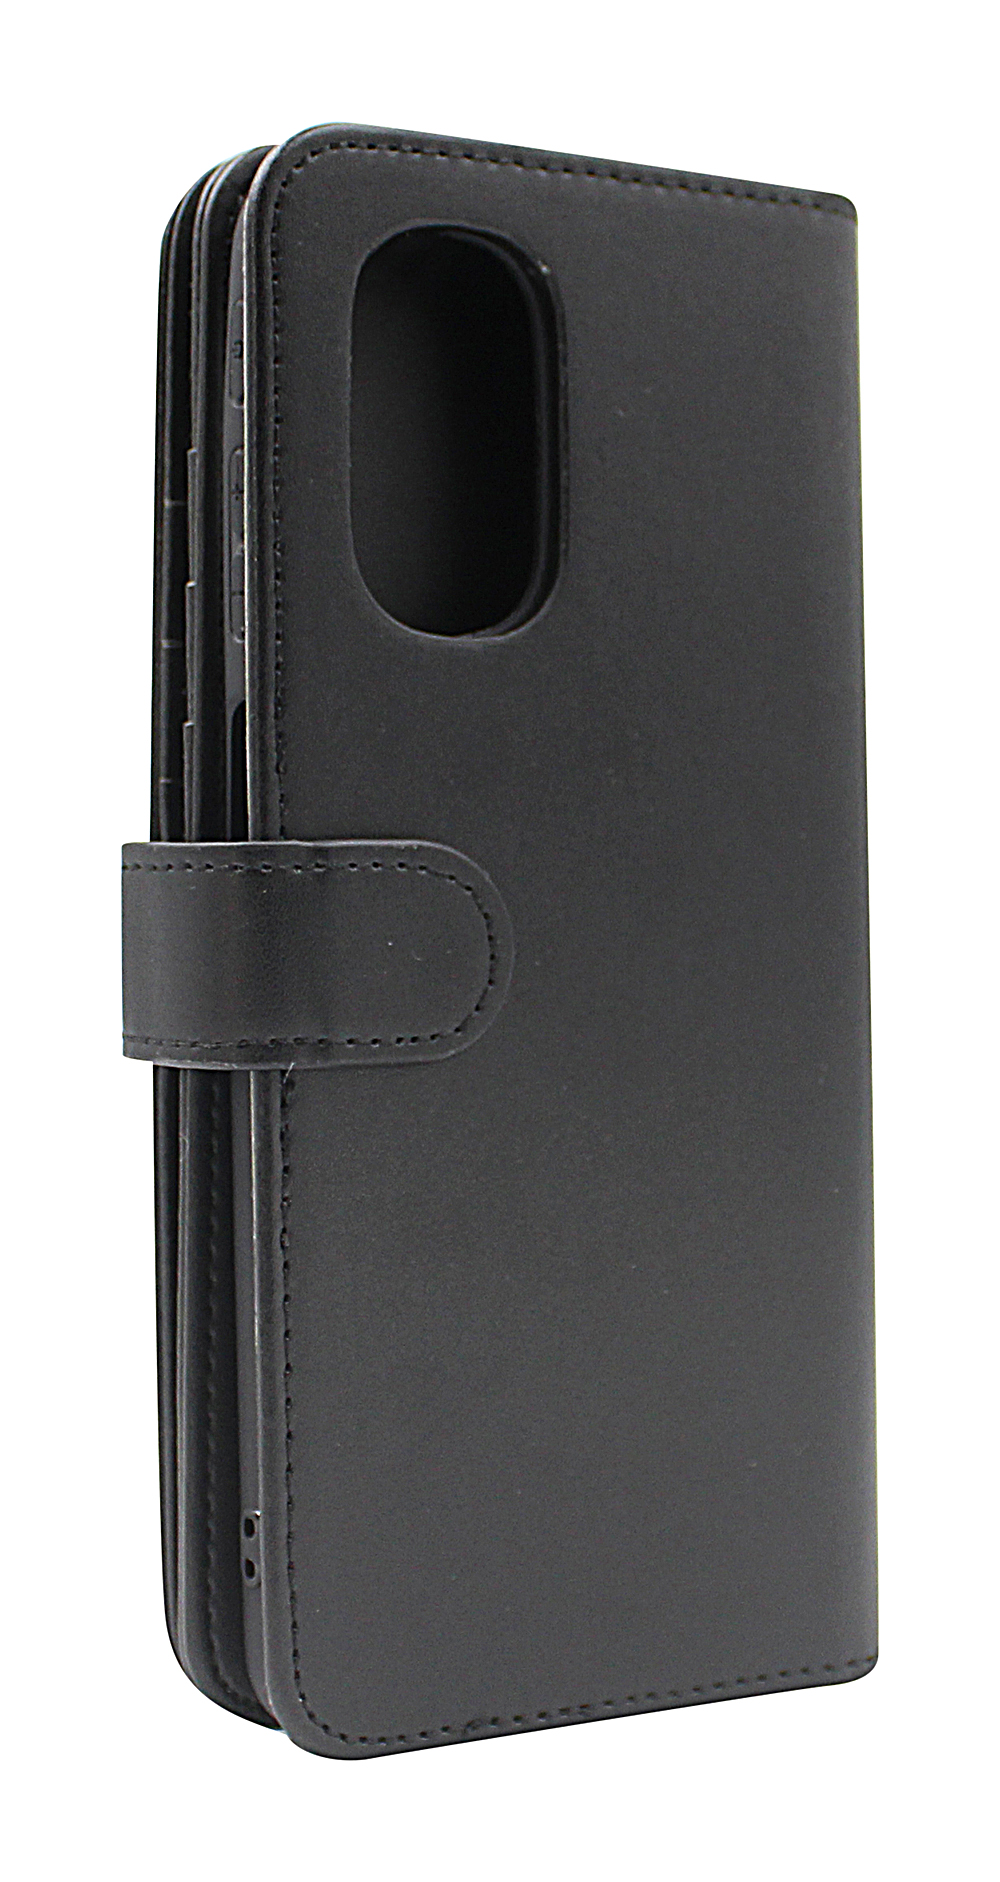 CoverInSkimblocker XL Wallet Motorola Moto G51